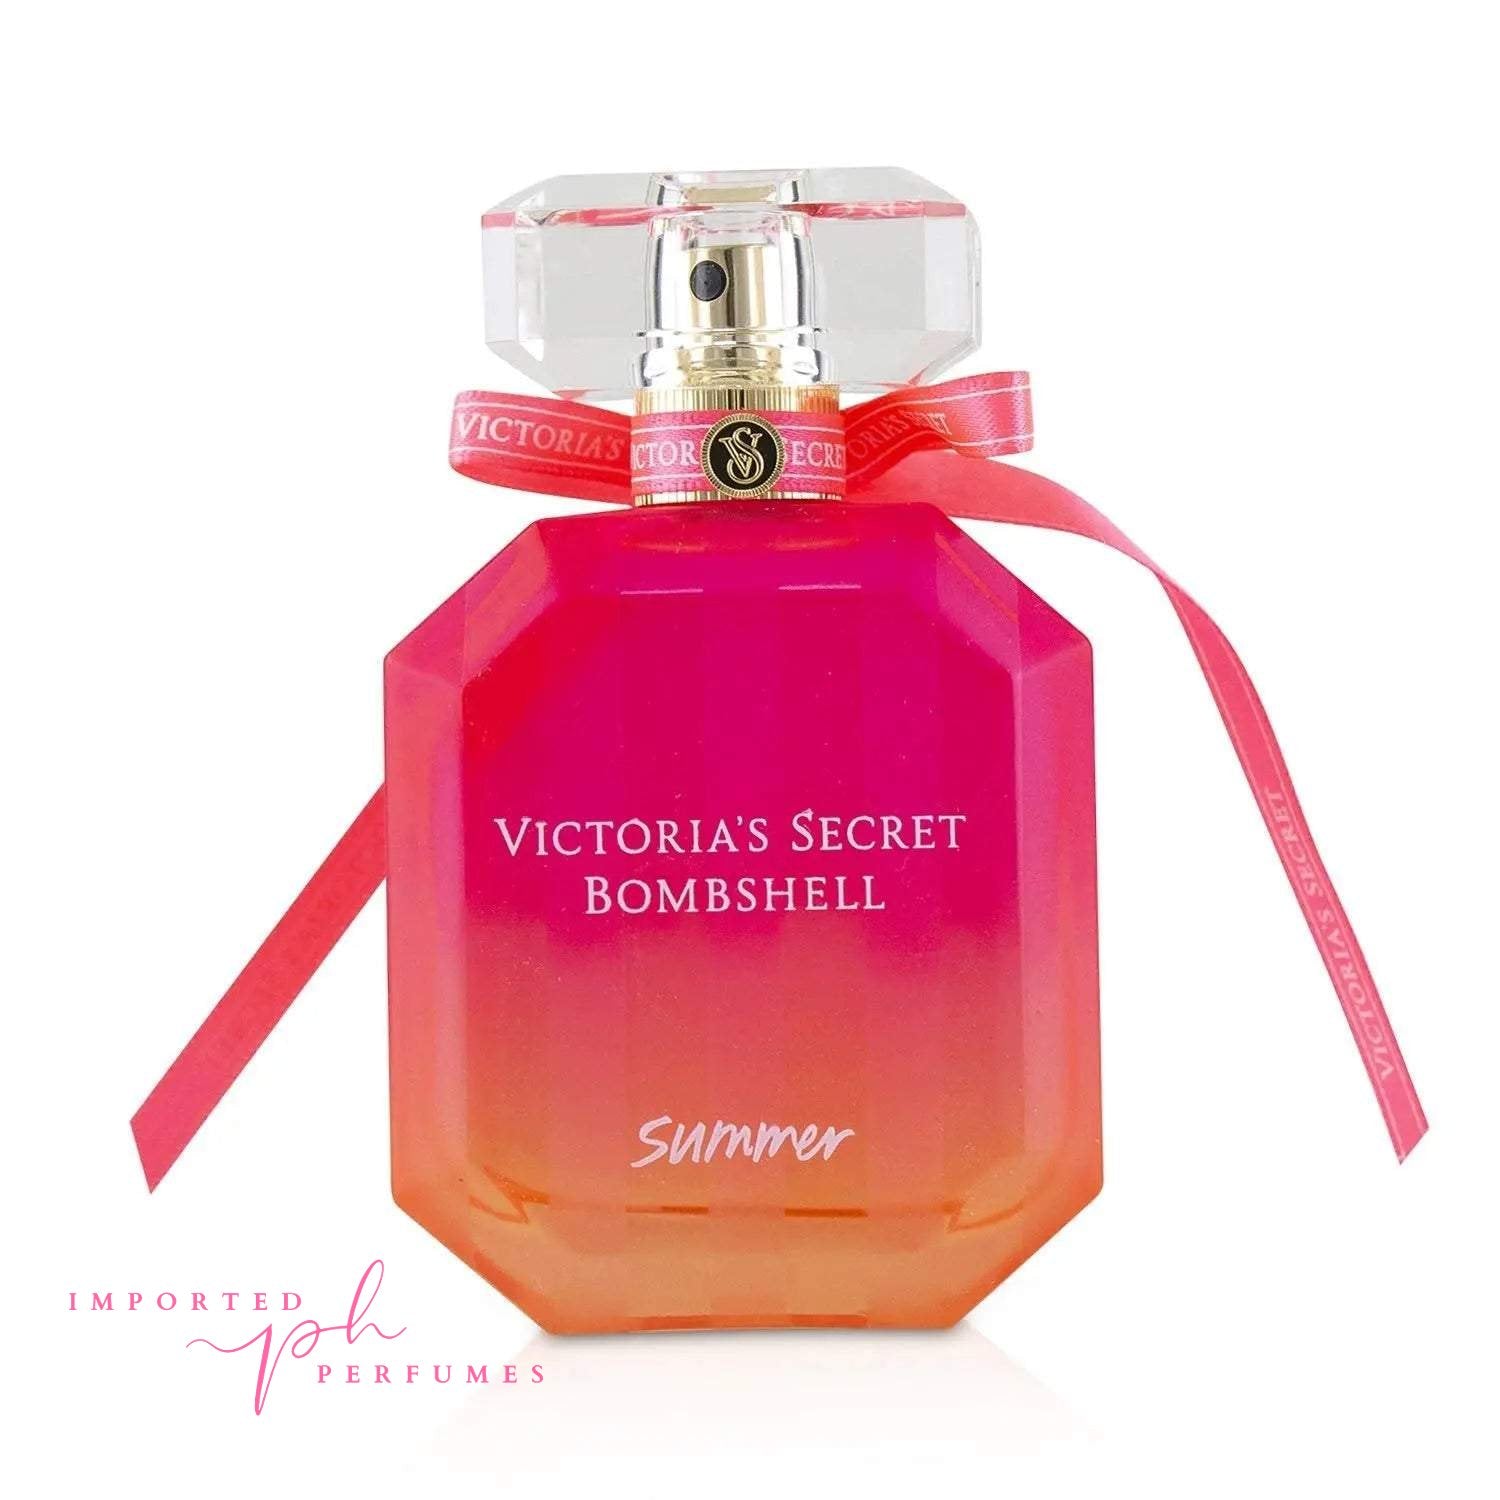 Victoria's Secret Bare Vanilla Fragrance Mist - Import Parfumerie